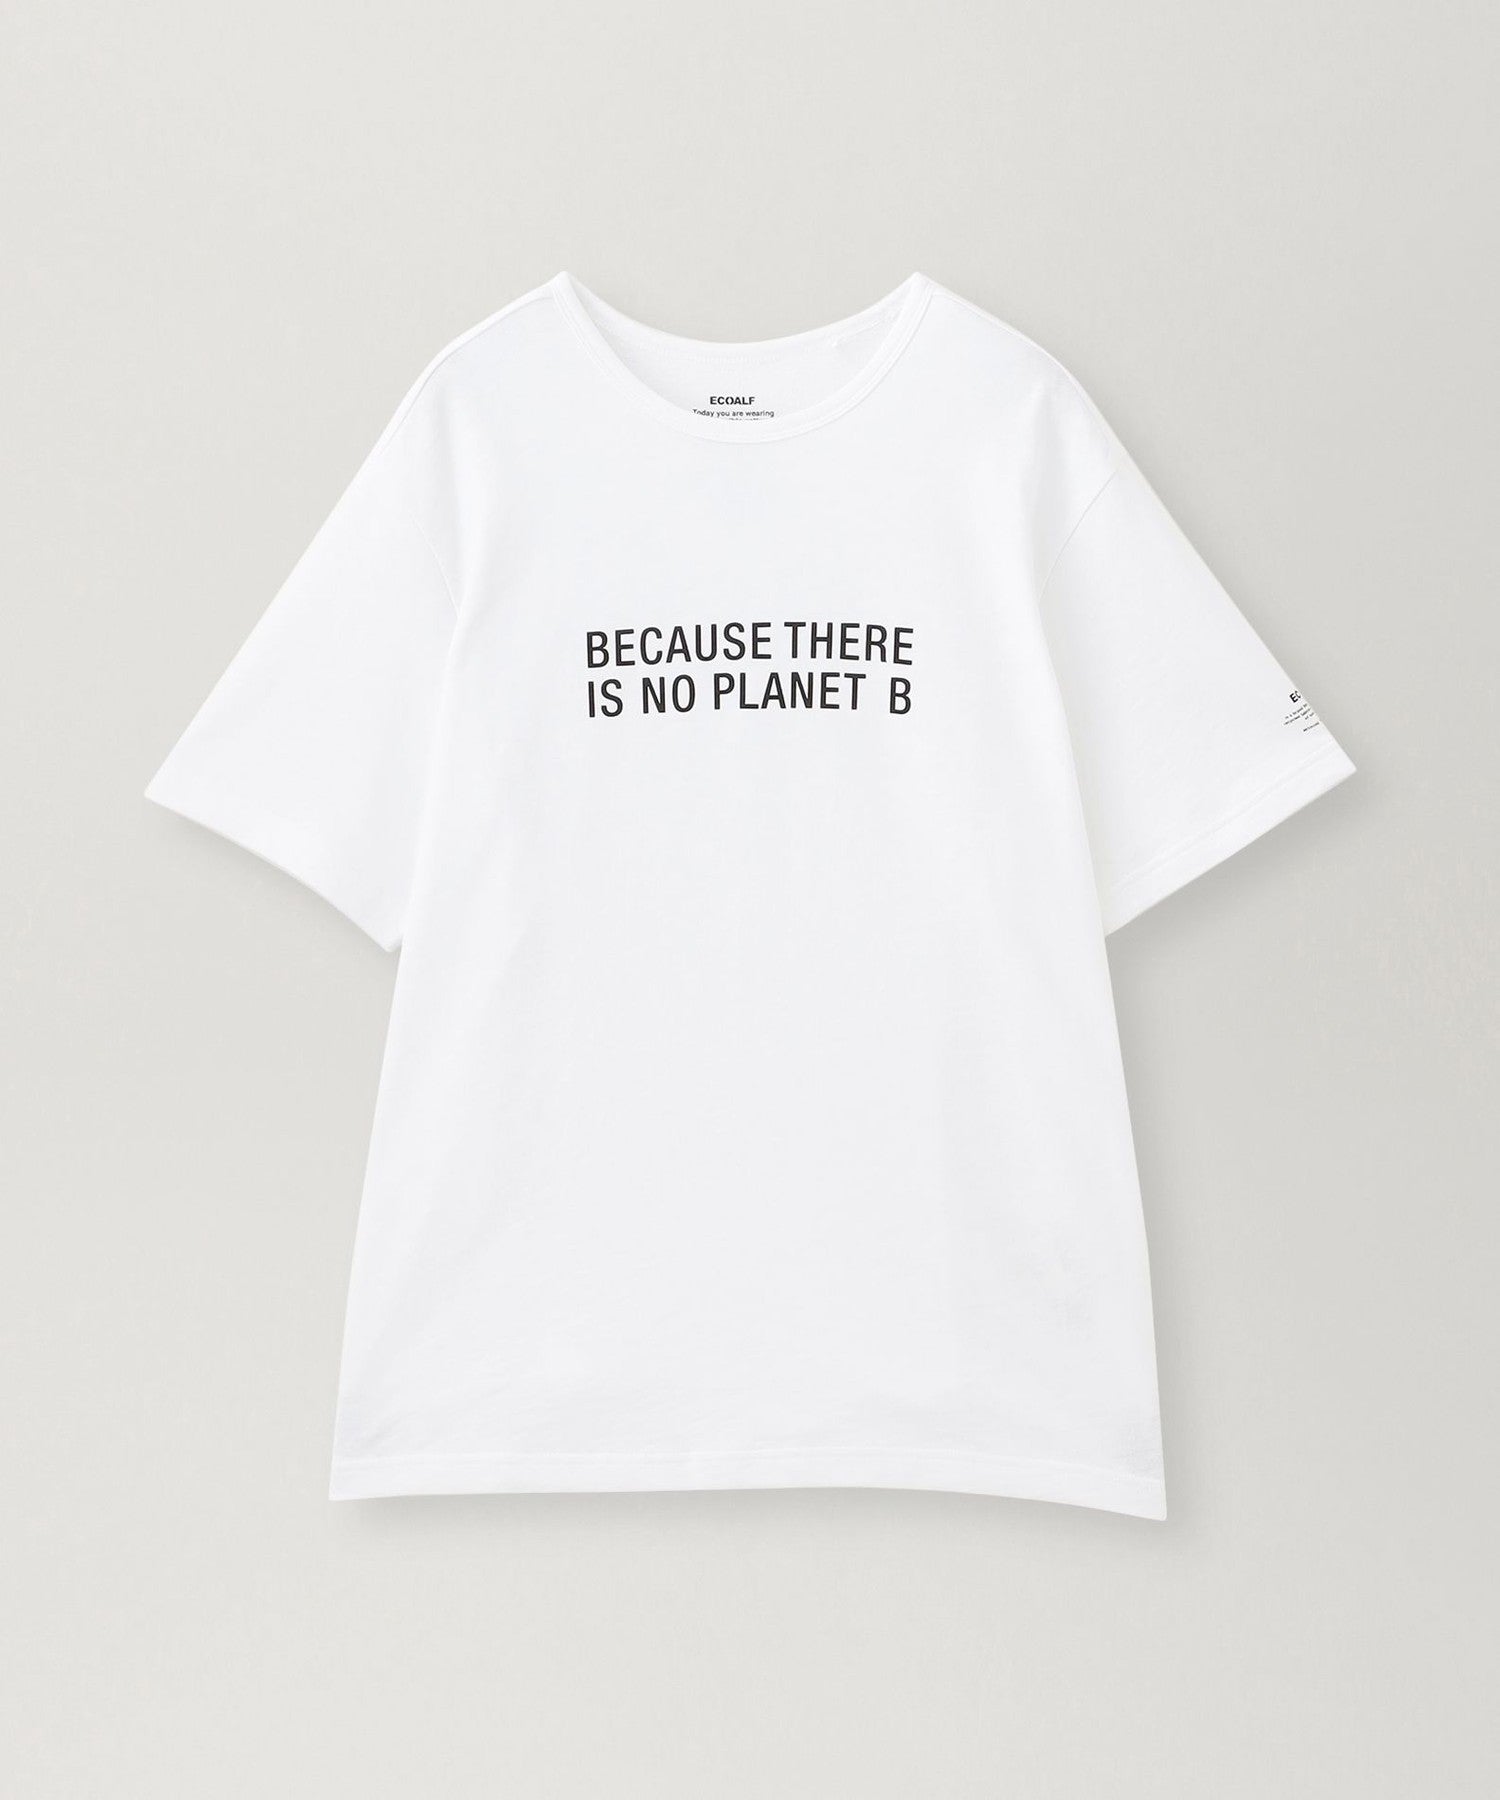 BECAUSE NEOワンハンドレッド Tシャツ for 窪塚洋介 / BECAUSE NEO100 T-SHIRT UNISEX